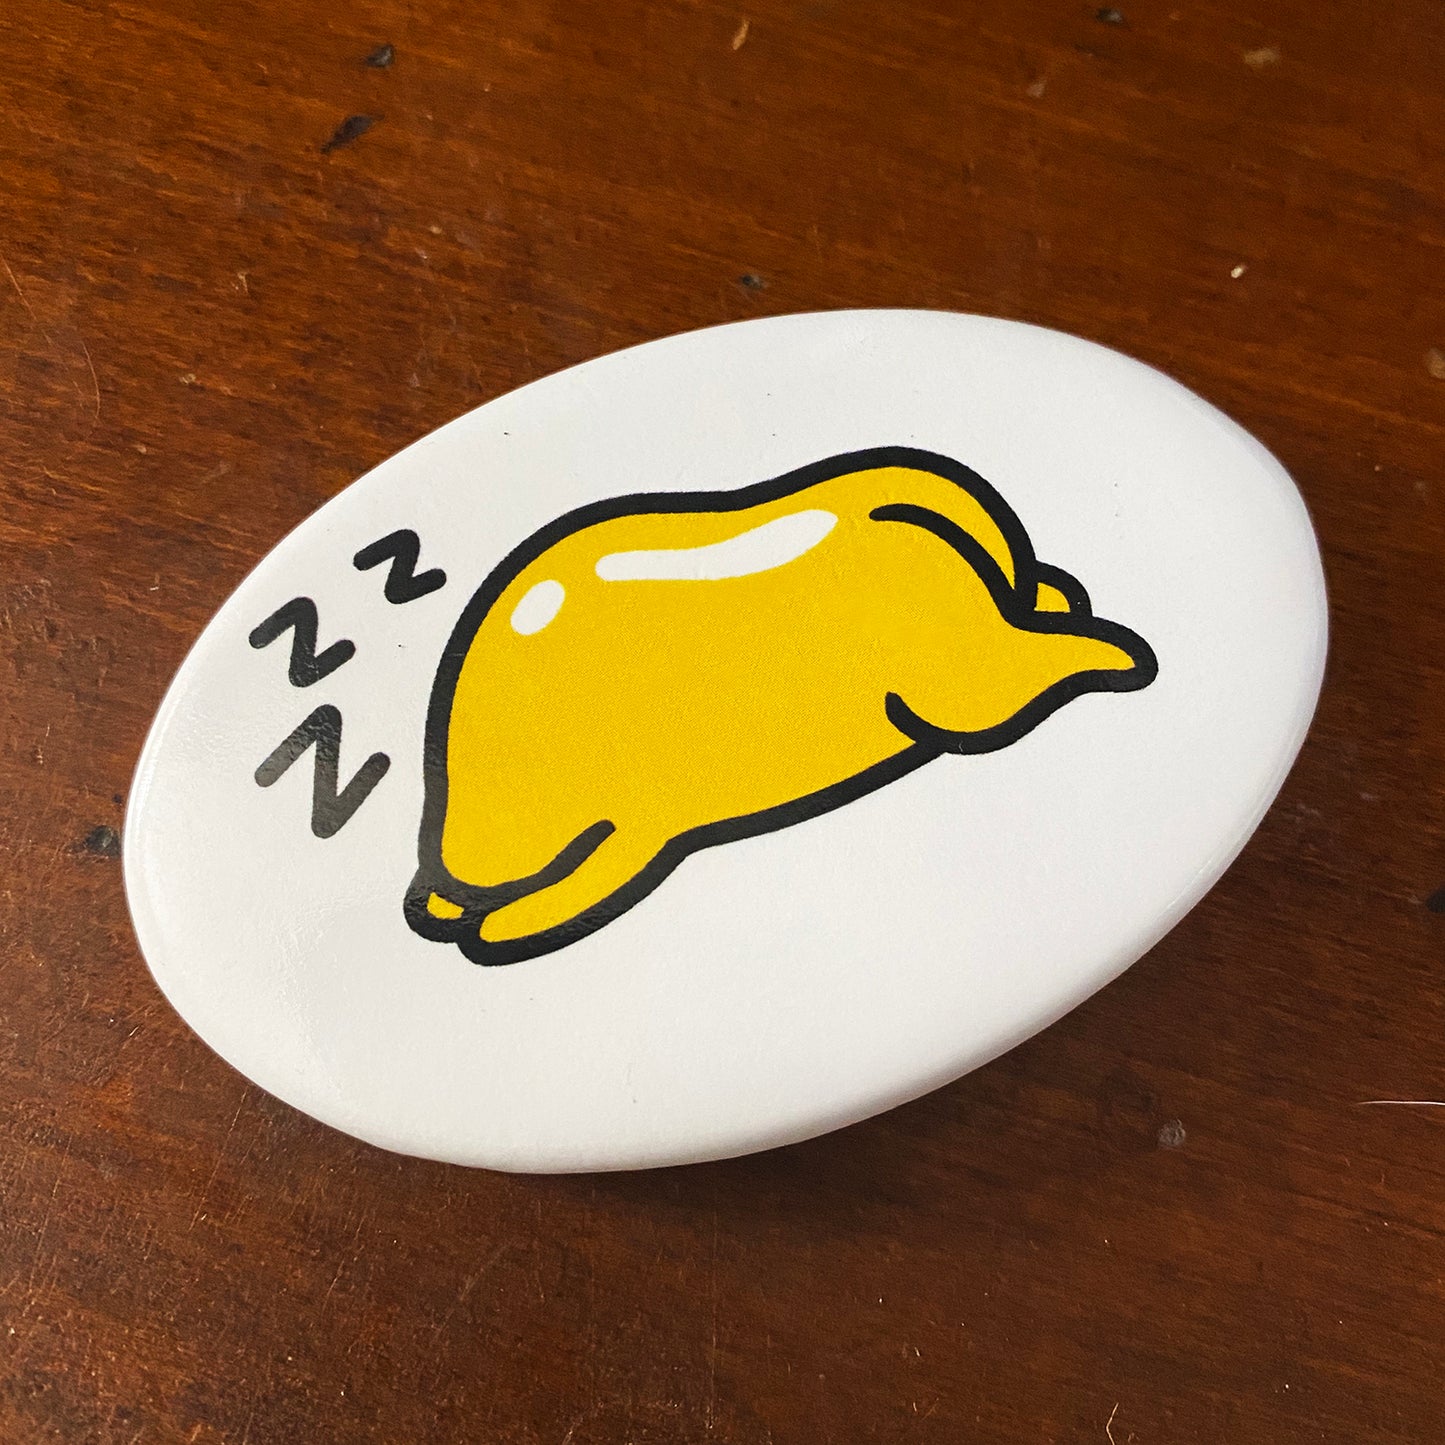 Sleepy Egg 3" x 1.75" button